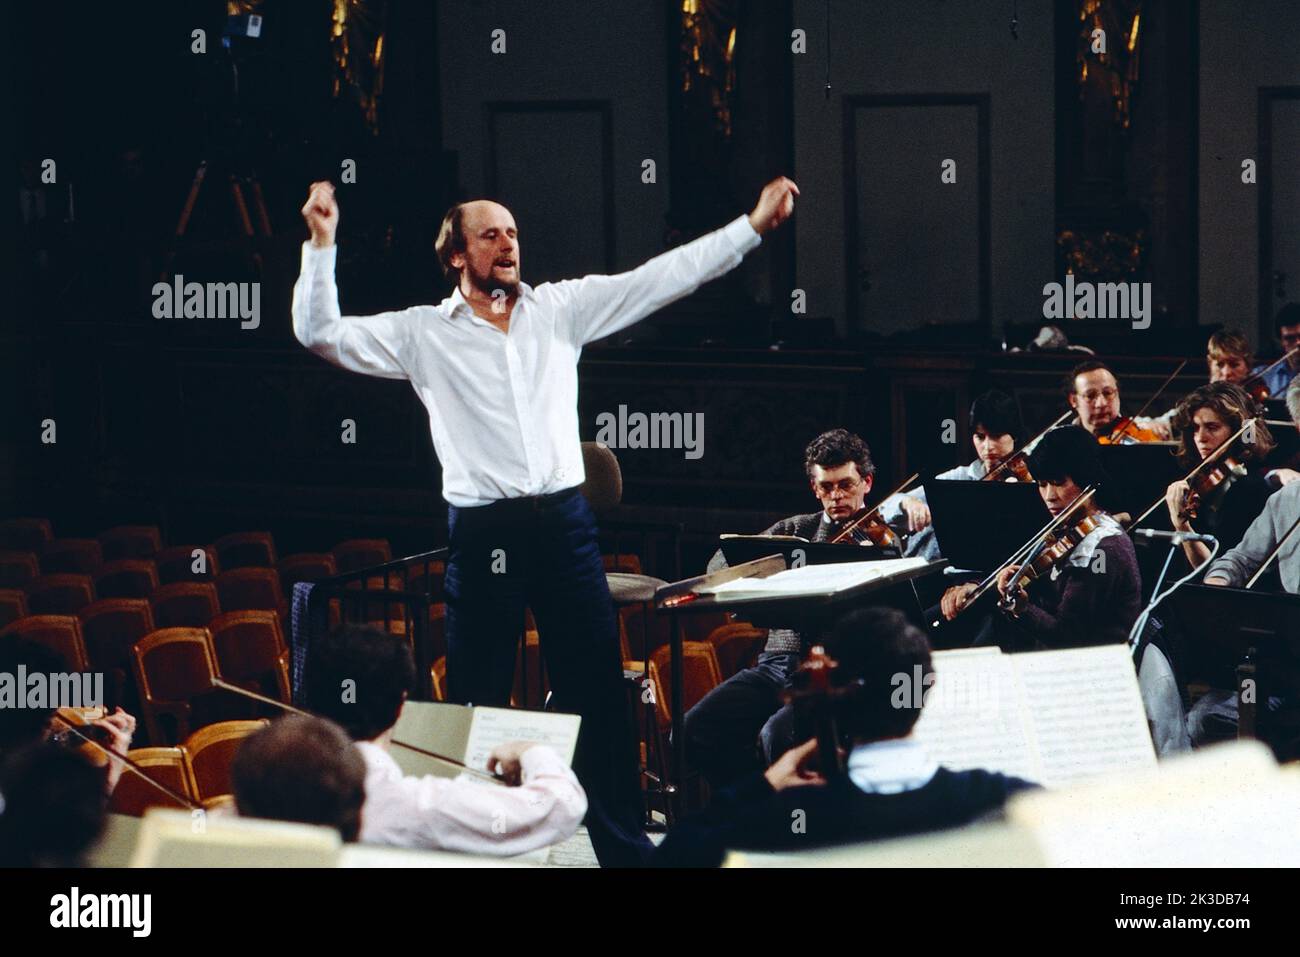 Roger Norrington, britischer Dirigent, Interpret Alter Musik, hier bei einer Orchesterprobe, circa 1997. Roger Norrington, director inglés, foto durante un ensayo de la Orquesta, alrededor de 1997. Foto de stock